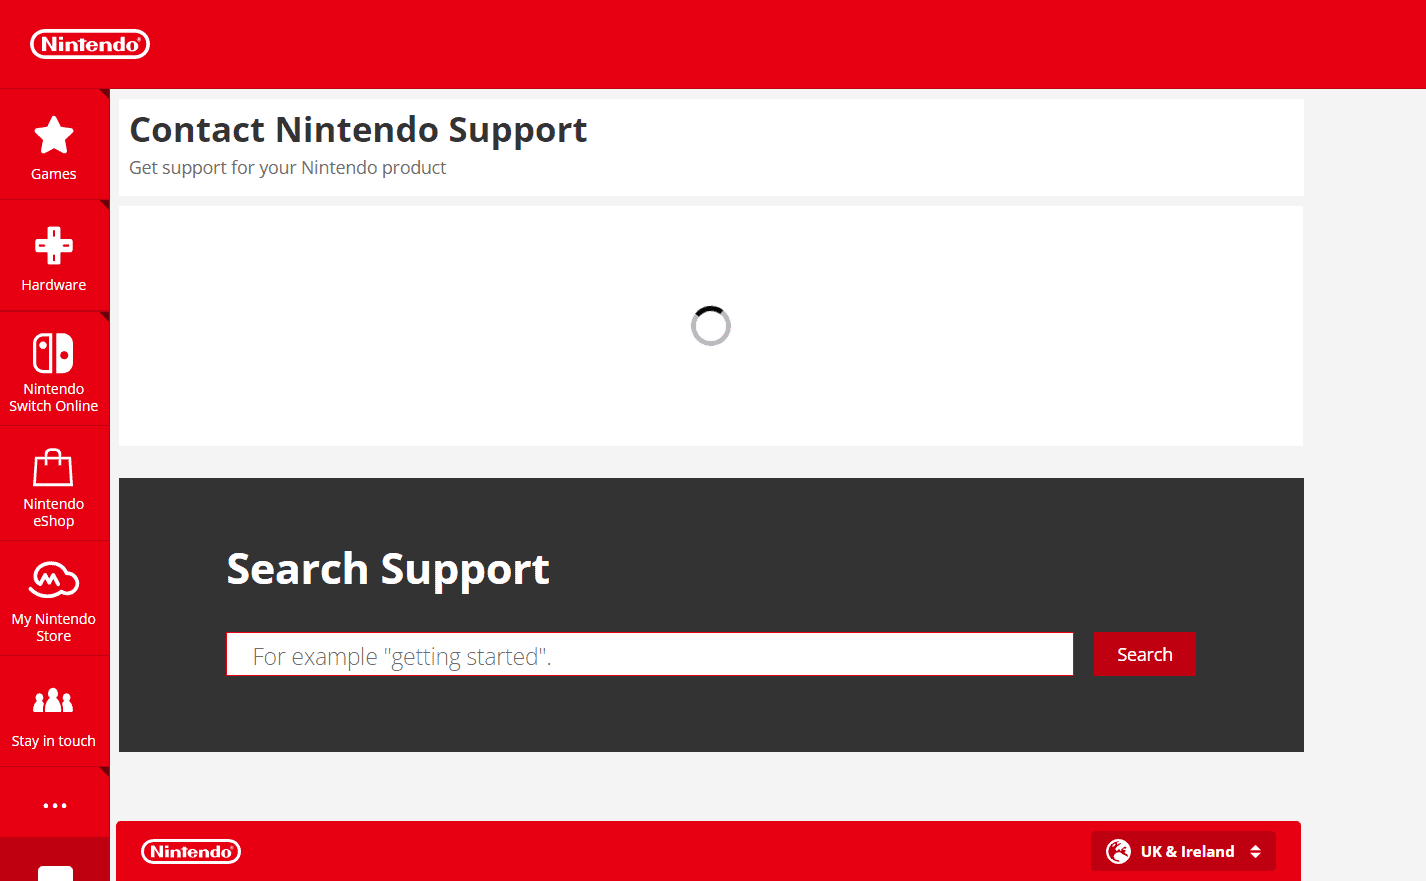 Contact Nintendo Support